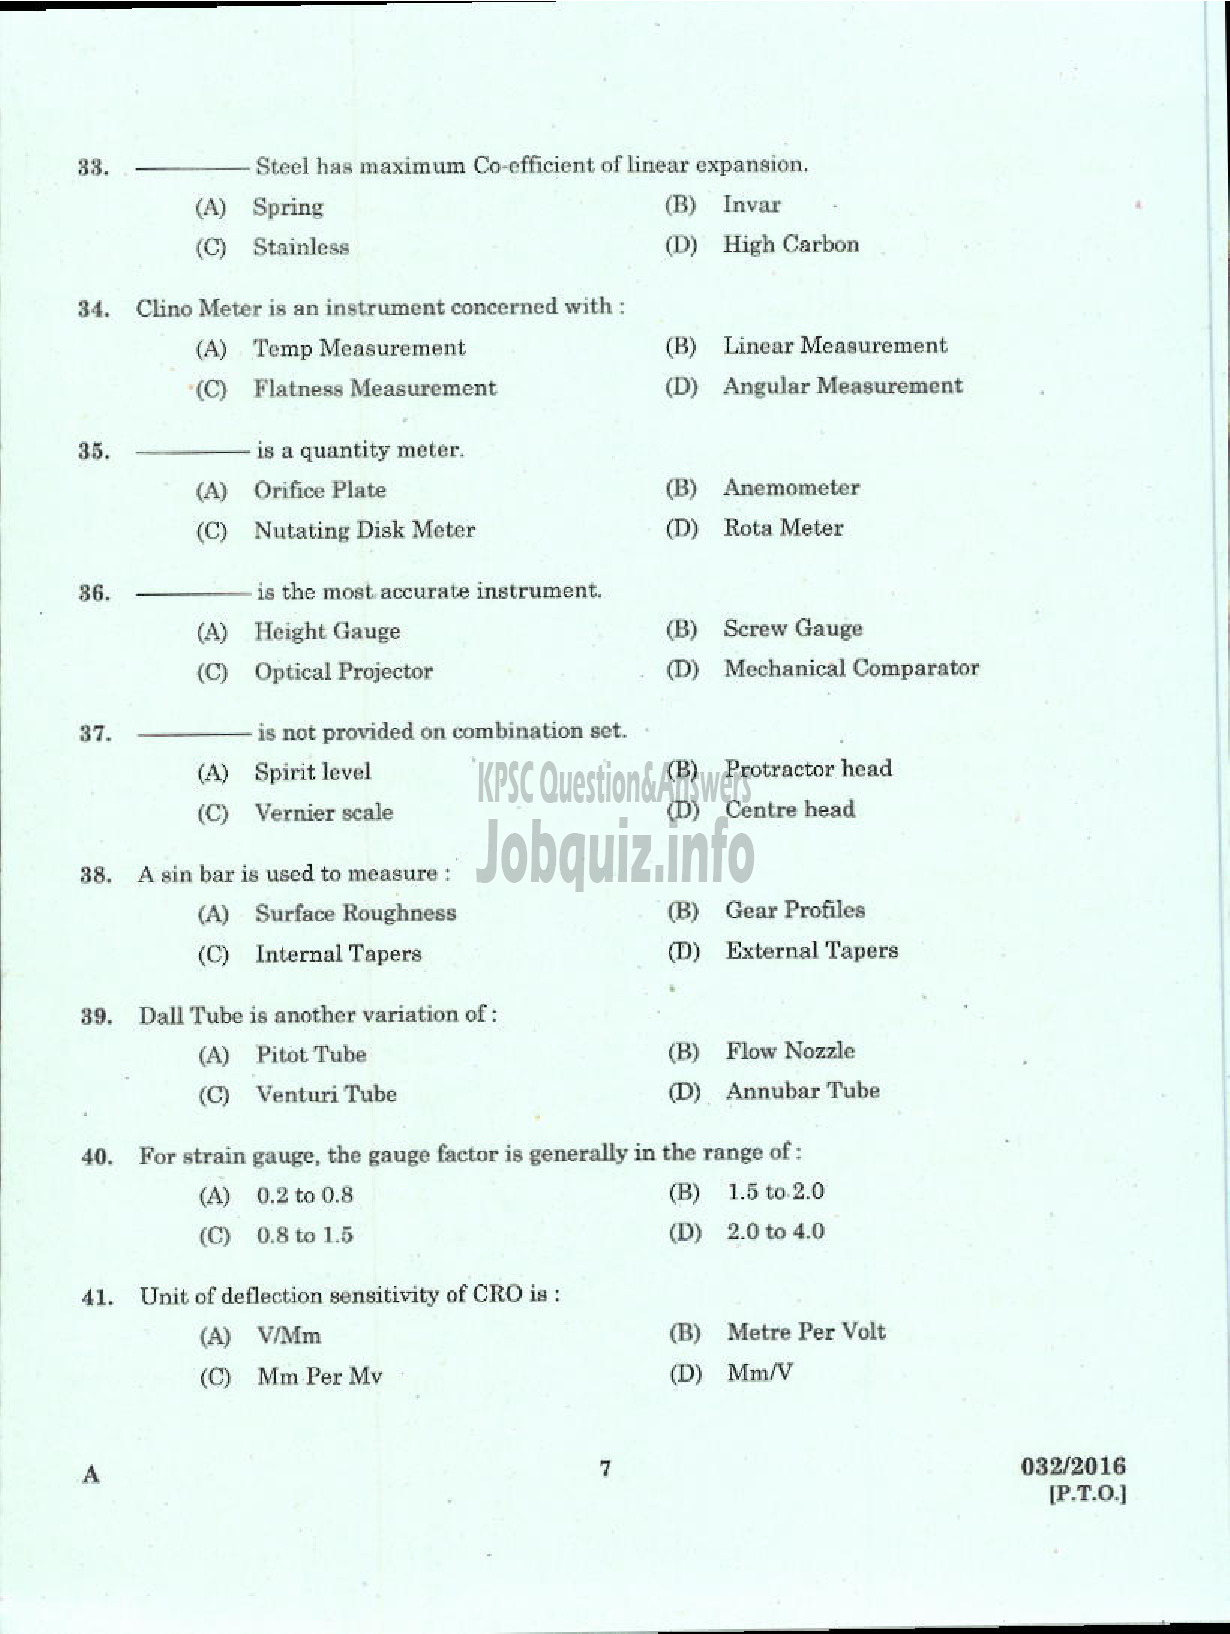 Kerala PSC Question Paper - TRADESMAN INSTRUMENT MECHANIC TECHNICAL EDUCATION-5